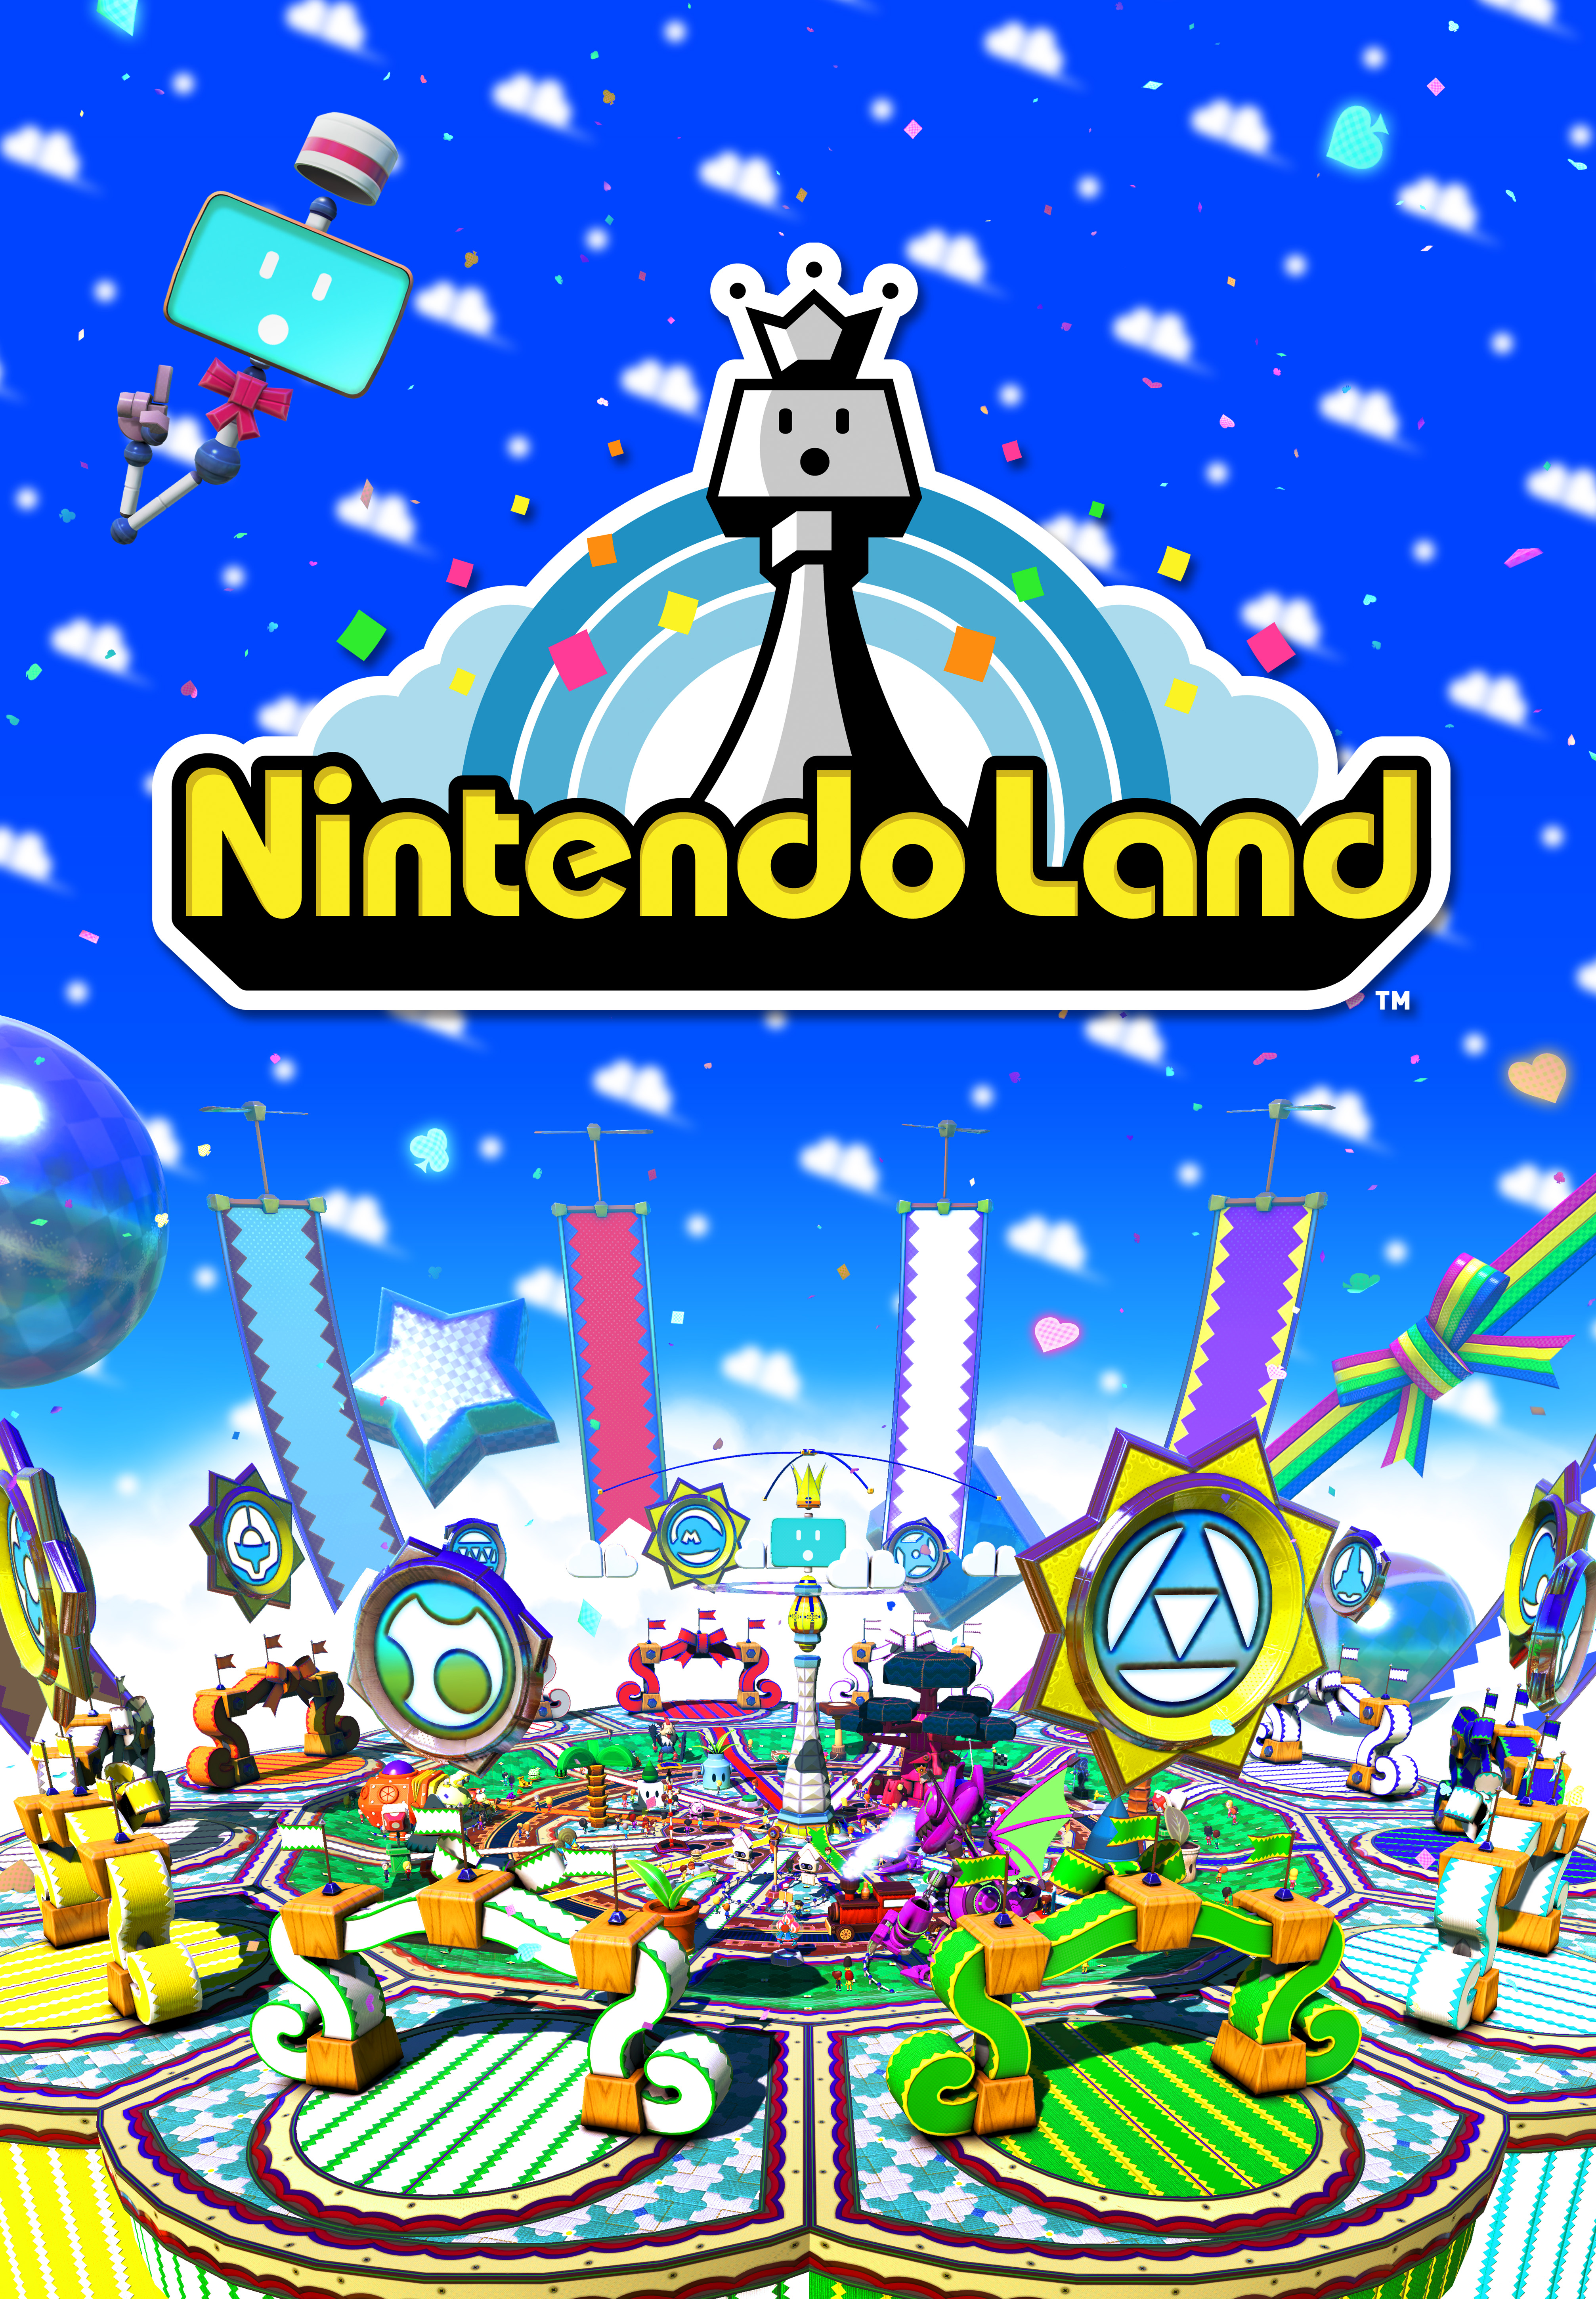 Nintendo land. Nintendo Land [Wii u]. Игра Нинтендо Лэнд. Nintendo Land парк развлечений. Монита Нинтендо ленд.